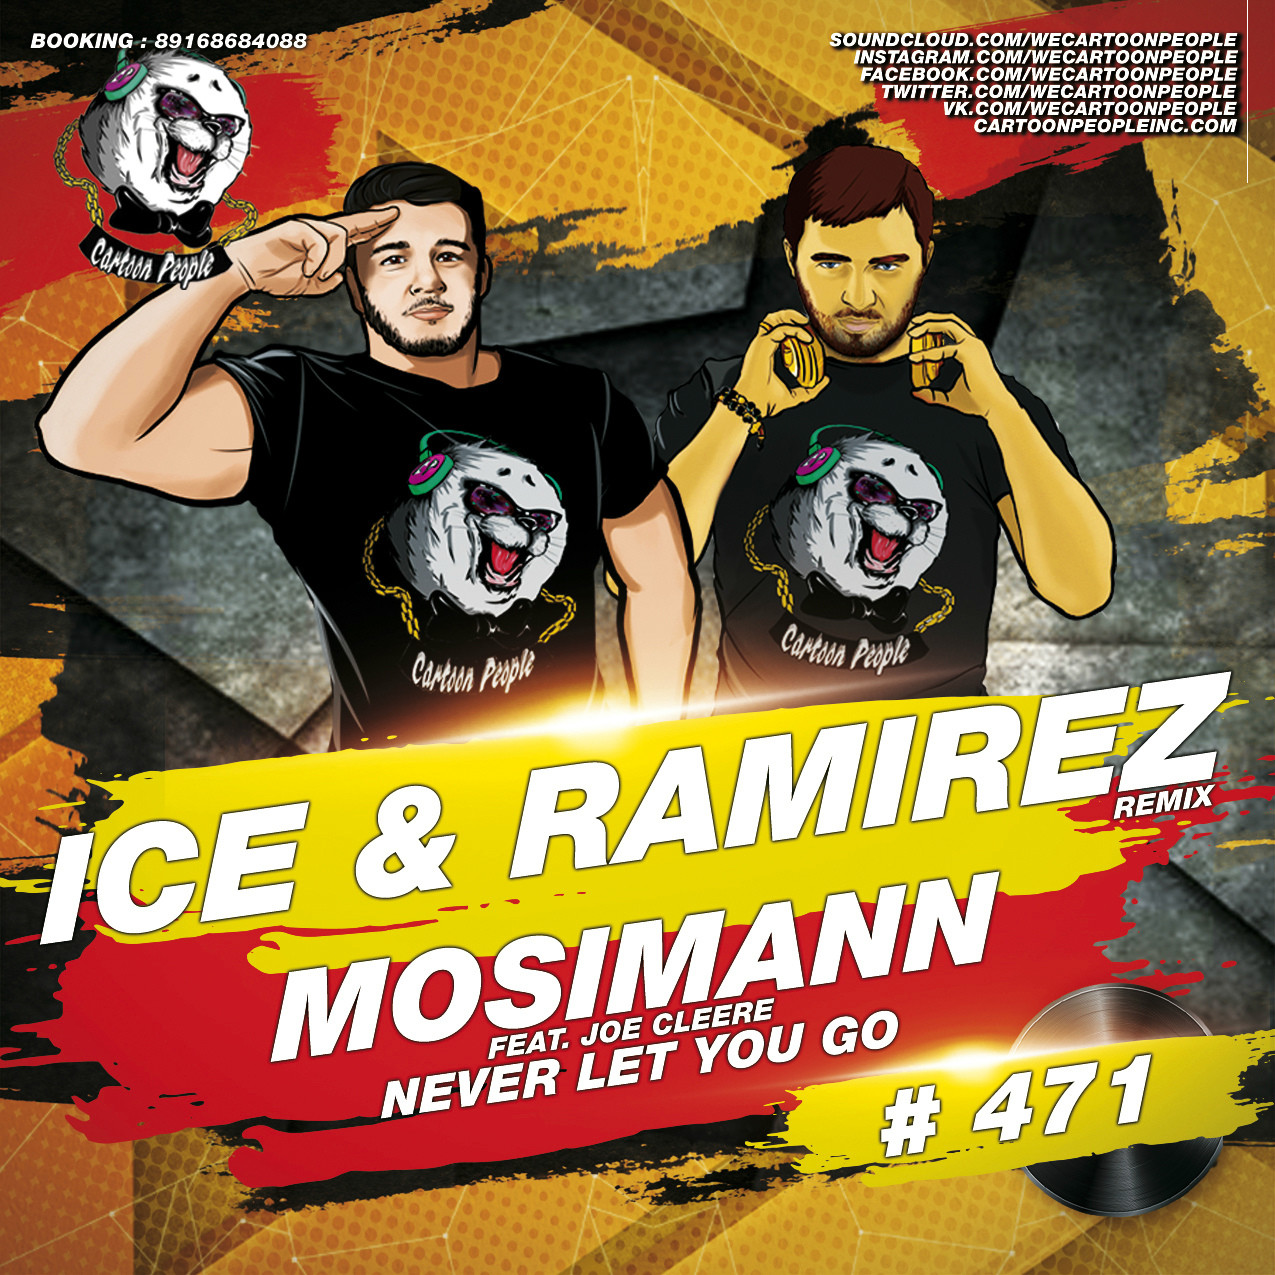 Mosimann - Never Let You Go (Feat. Joe Cleere)(Ice I Ramirez Remix)